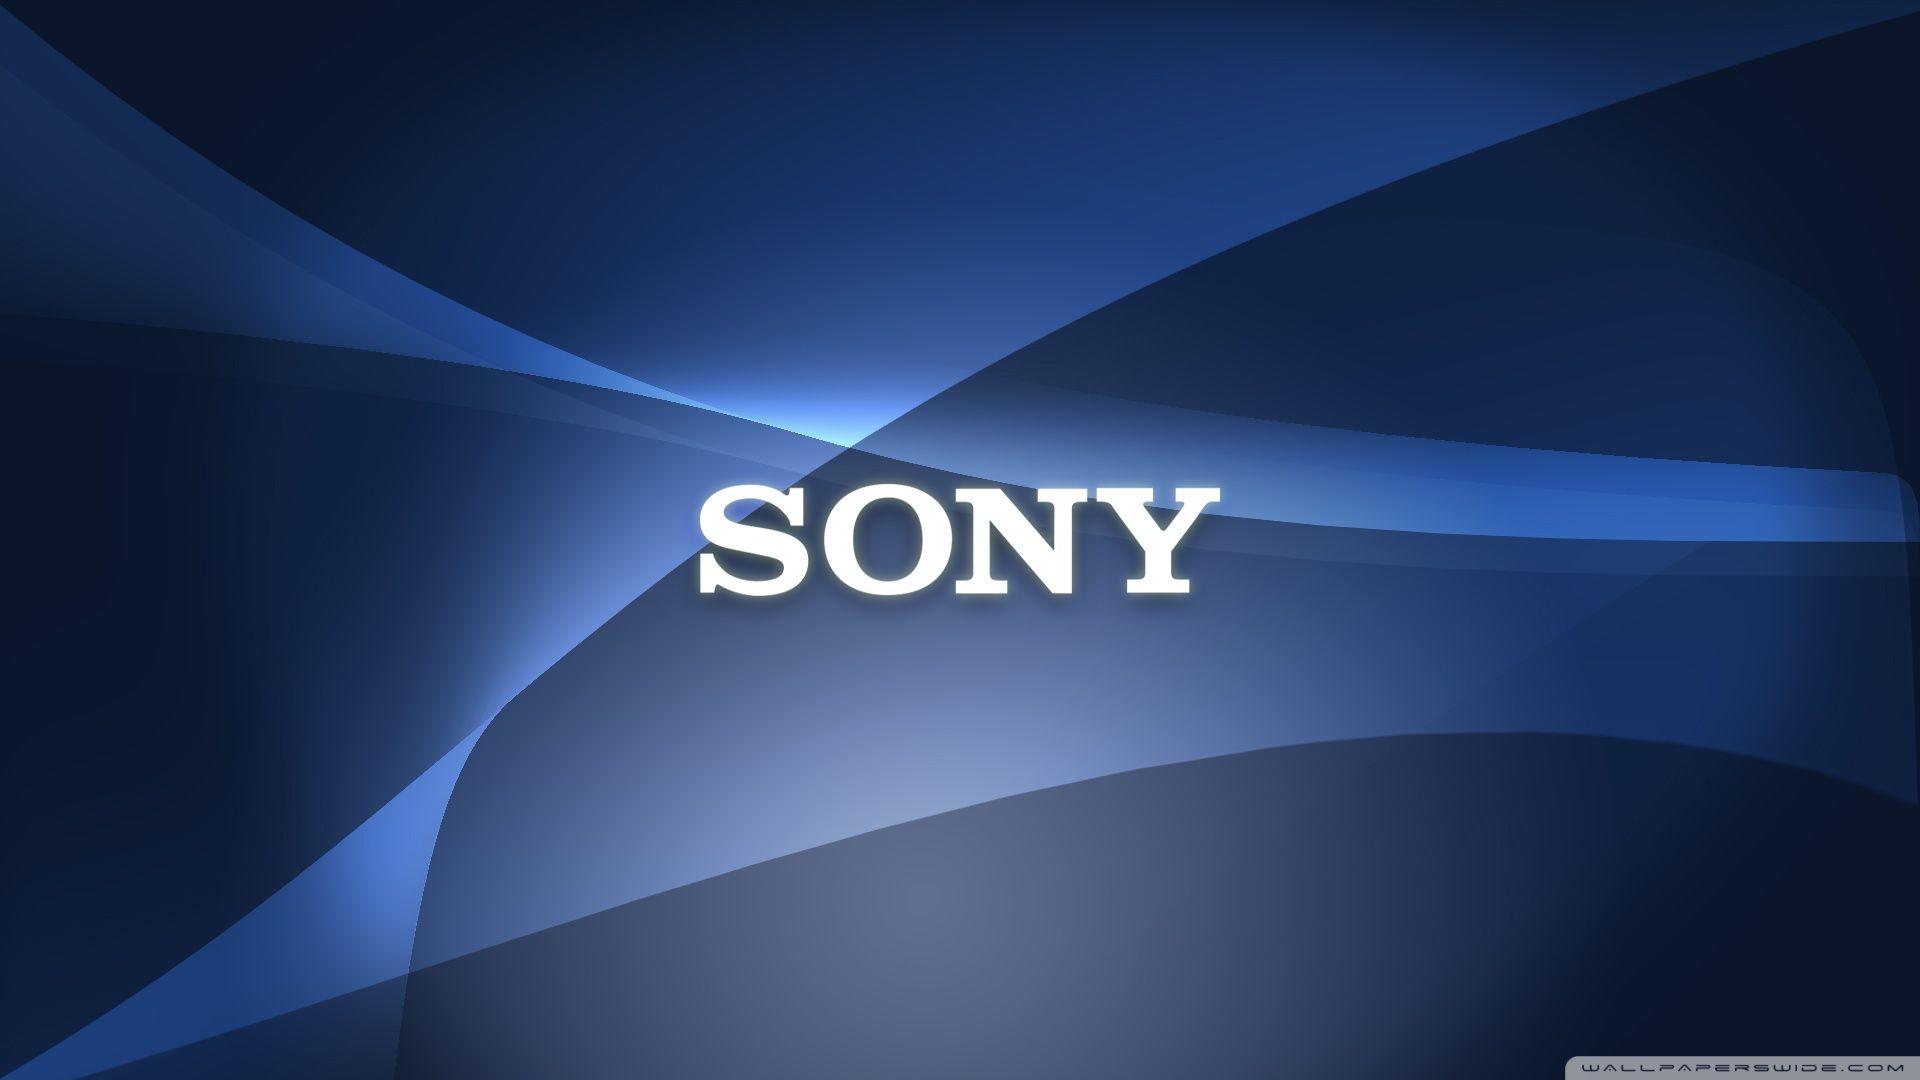 Sony HD Wallpapers - Top Free Sony HD